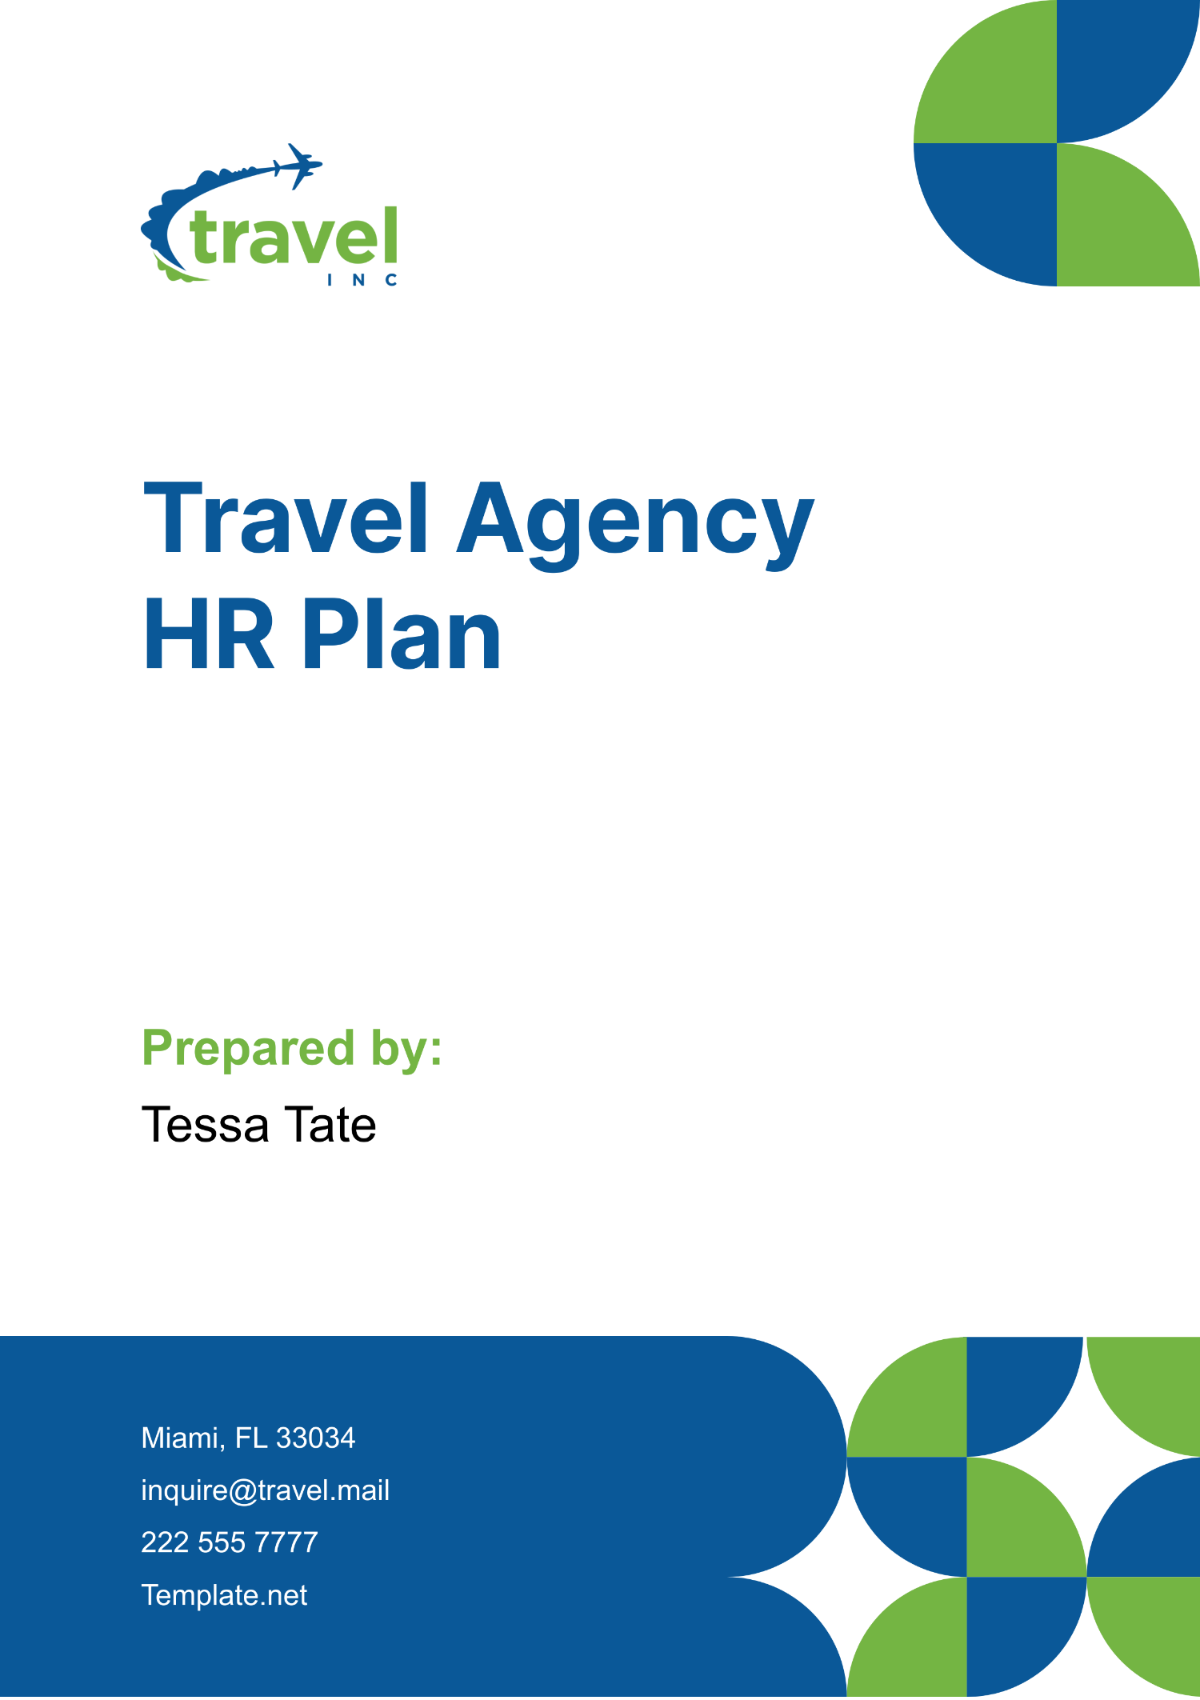 Travel Agency HR Plan Template